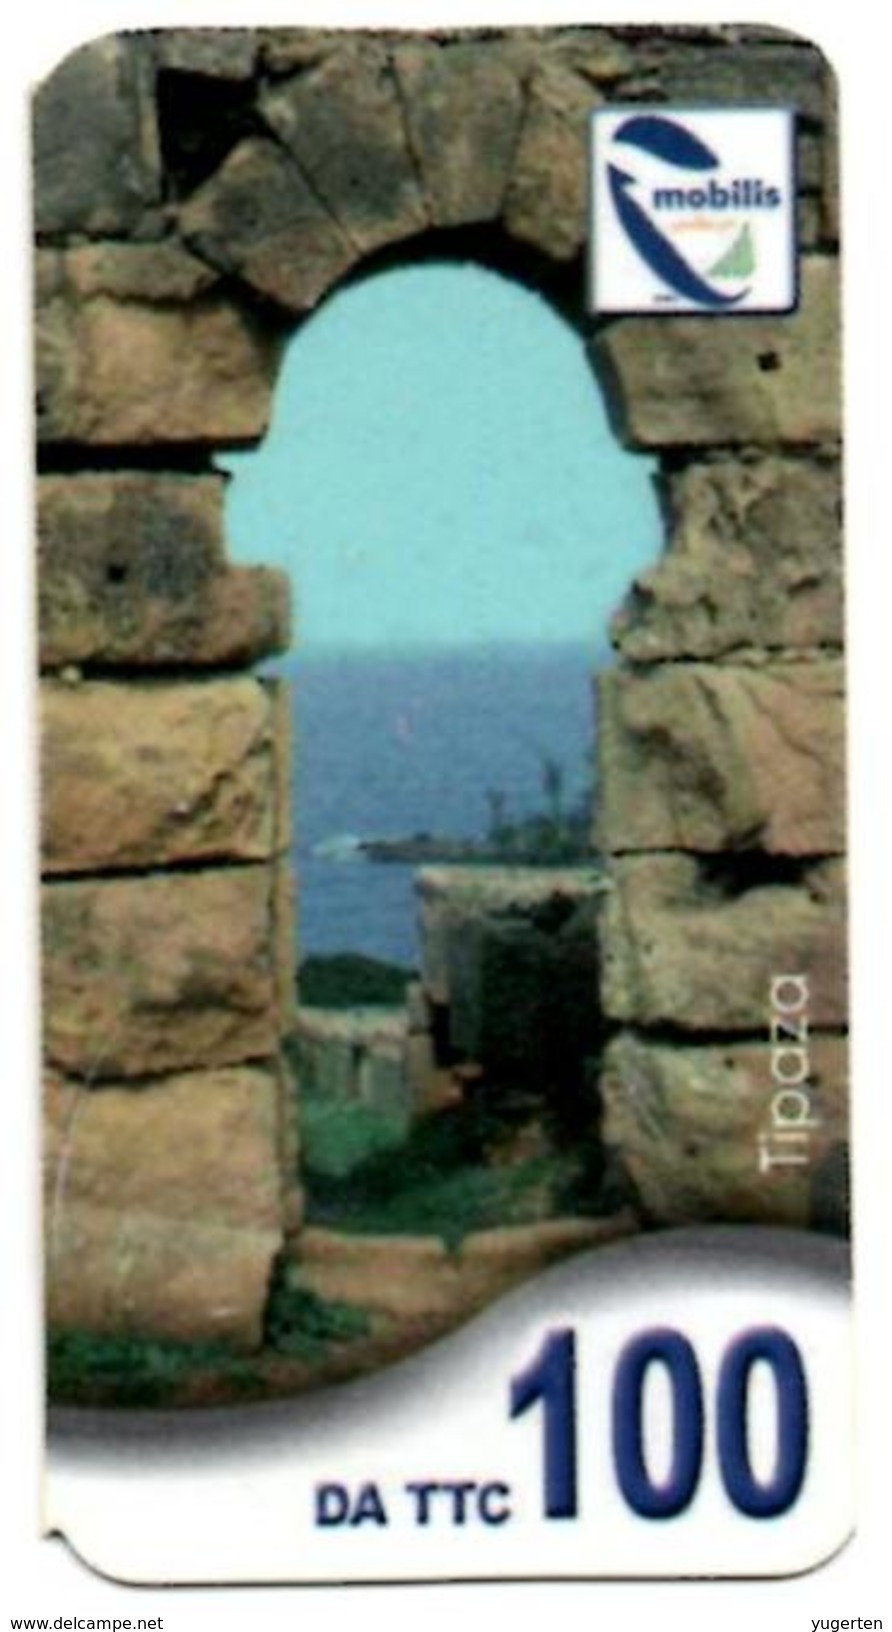 Phonecard Télécarte Mobilis Algérie Algeria - Tipaza Tipasa Roman Ruins Telefonkarte Telefonica - Algerien